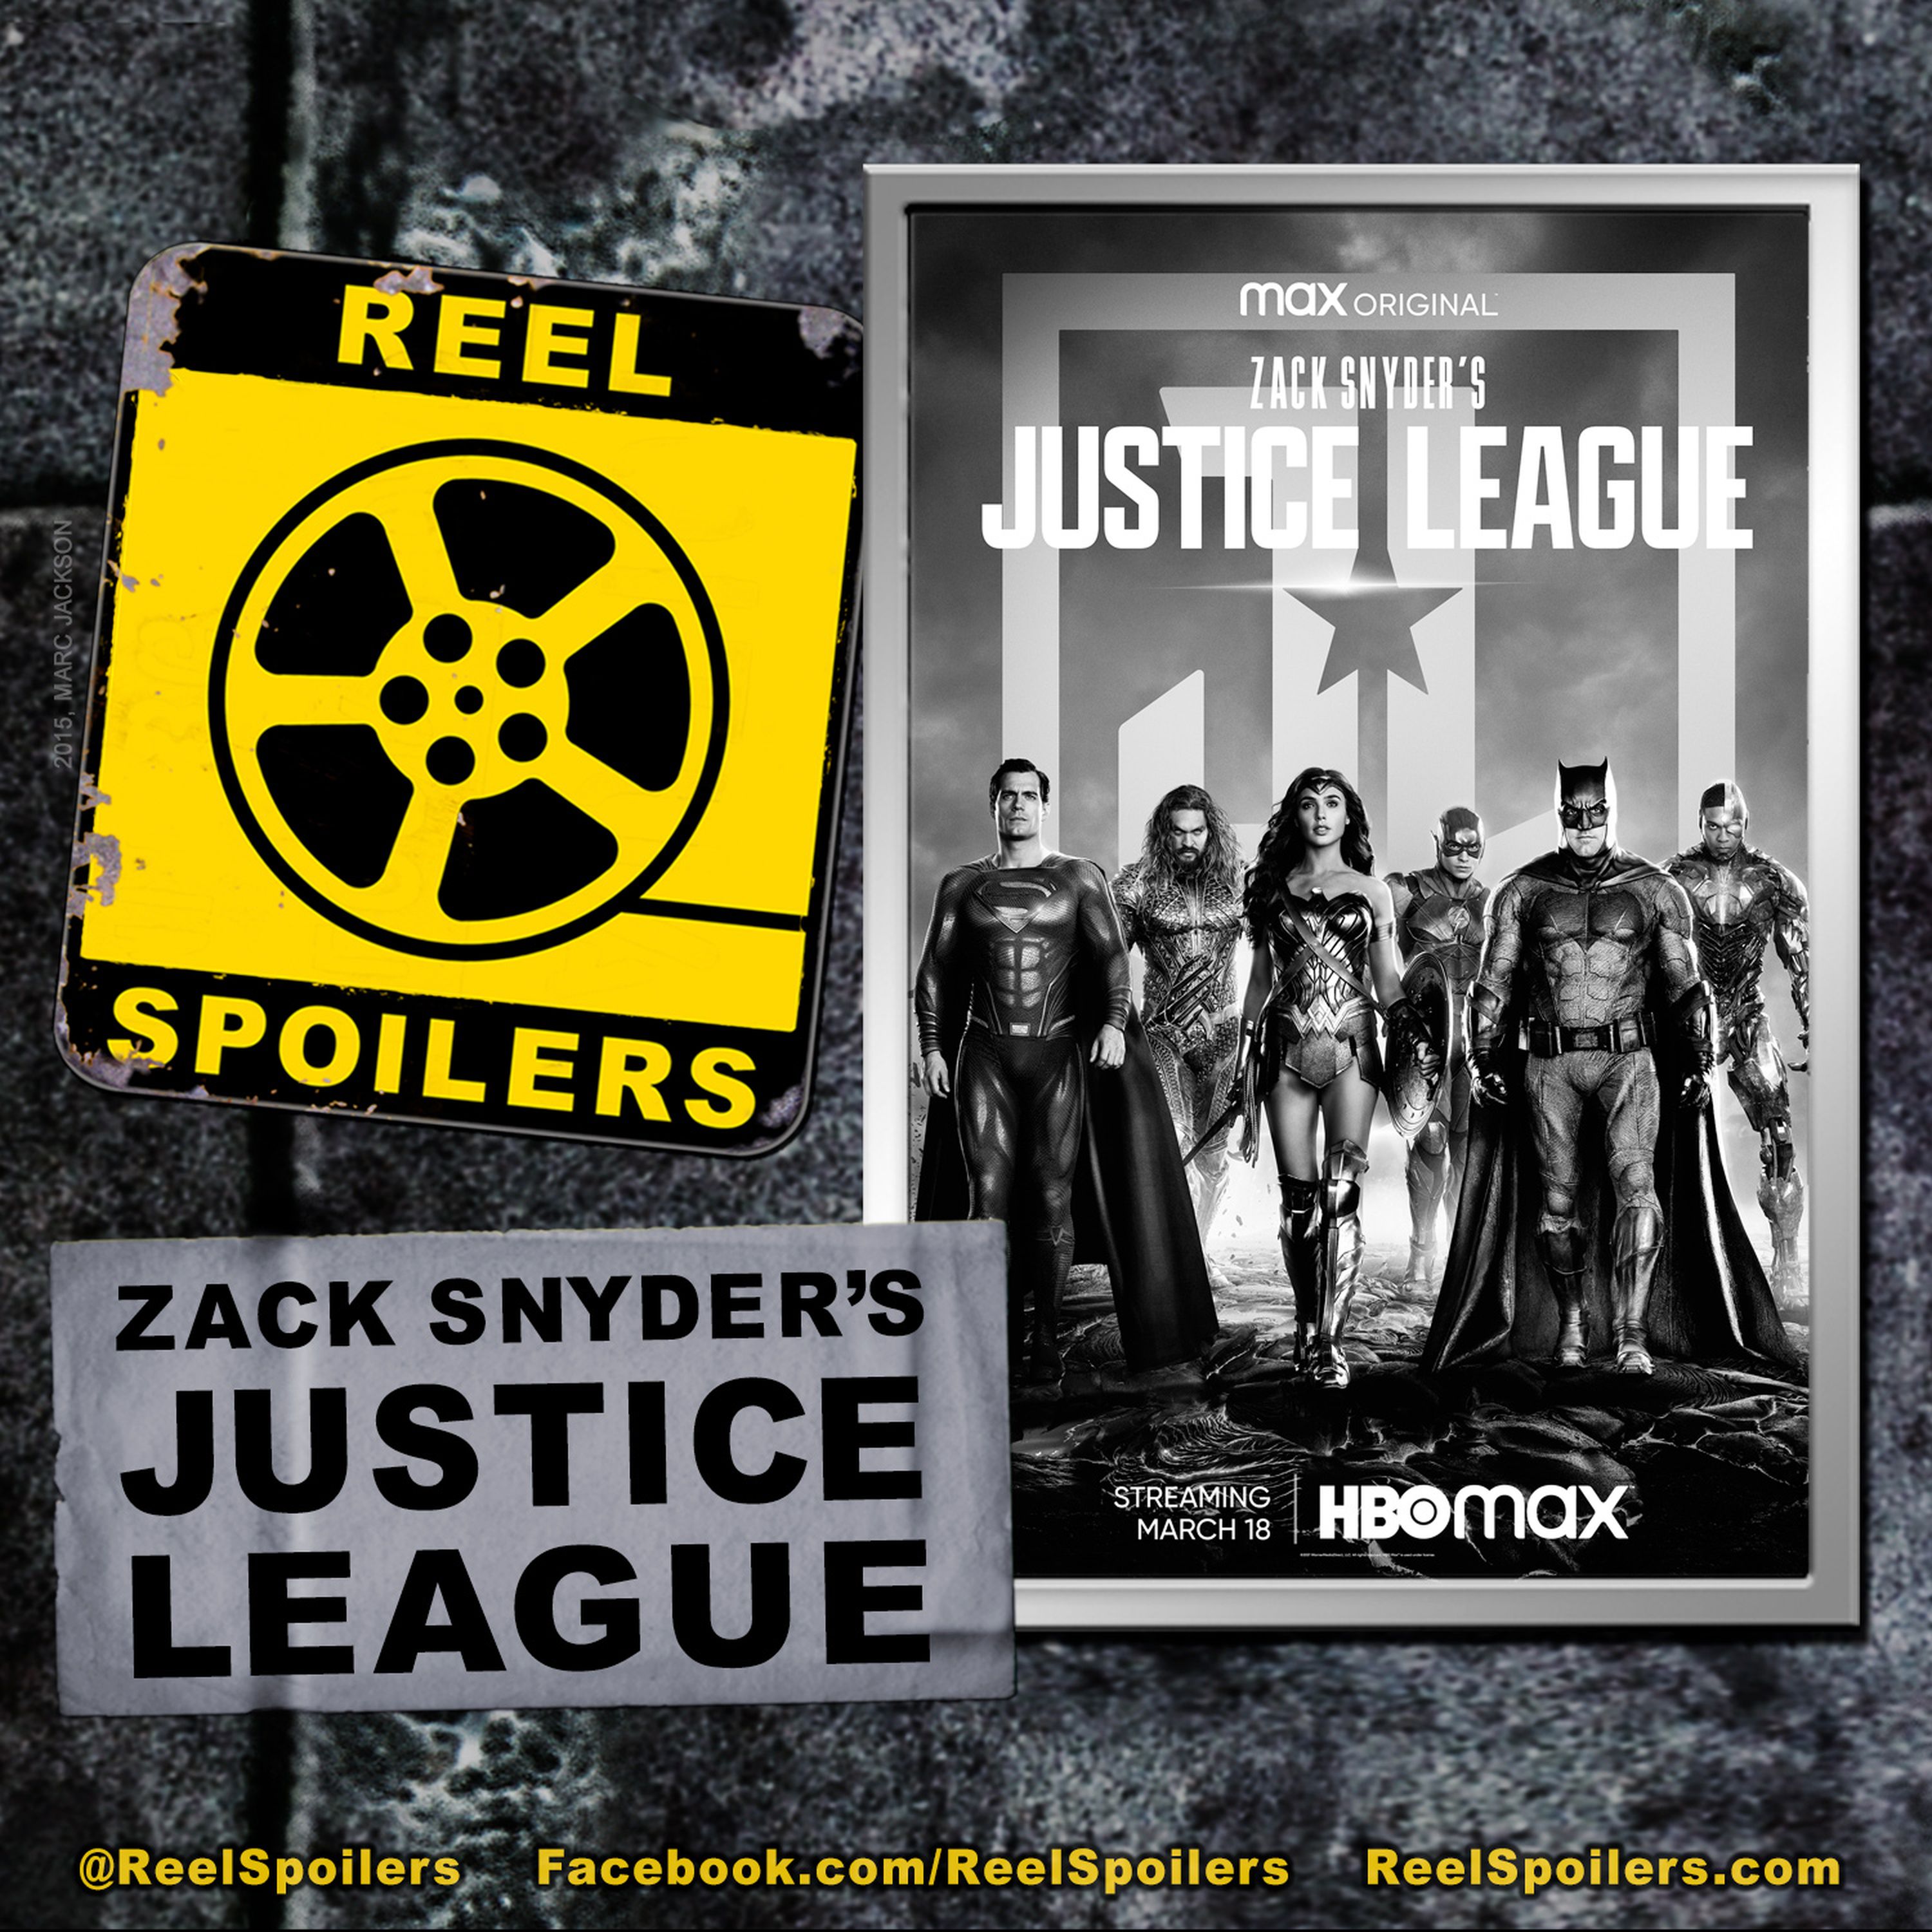 ZACK SNYDER'S JUSTICE LEAGUE Starring Ben Affleck, Gal Gadot, Henry Cavill Image